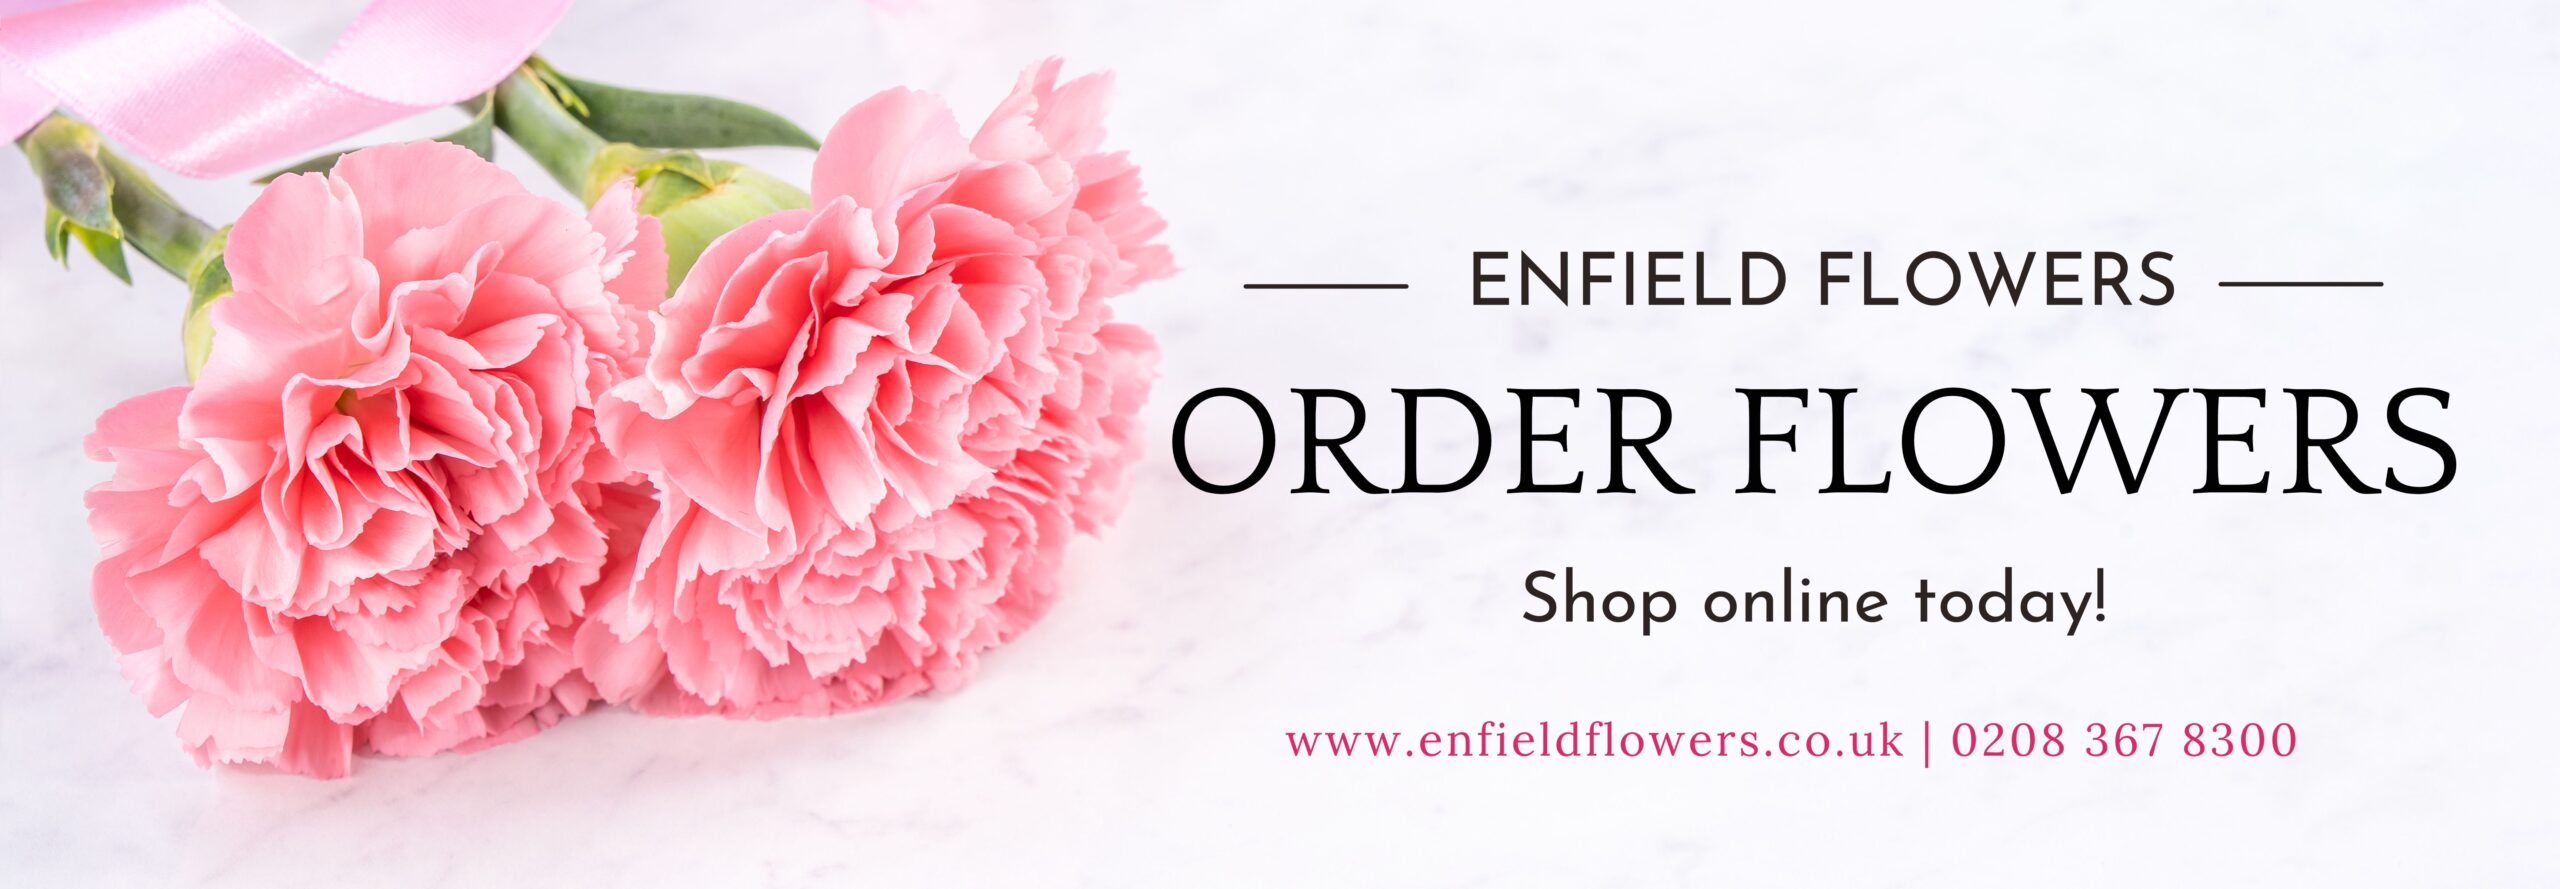 florists website - banners (57)